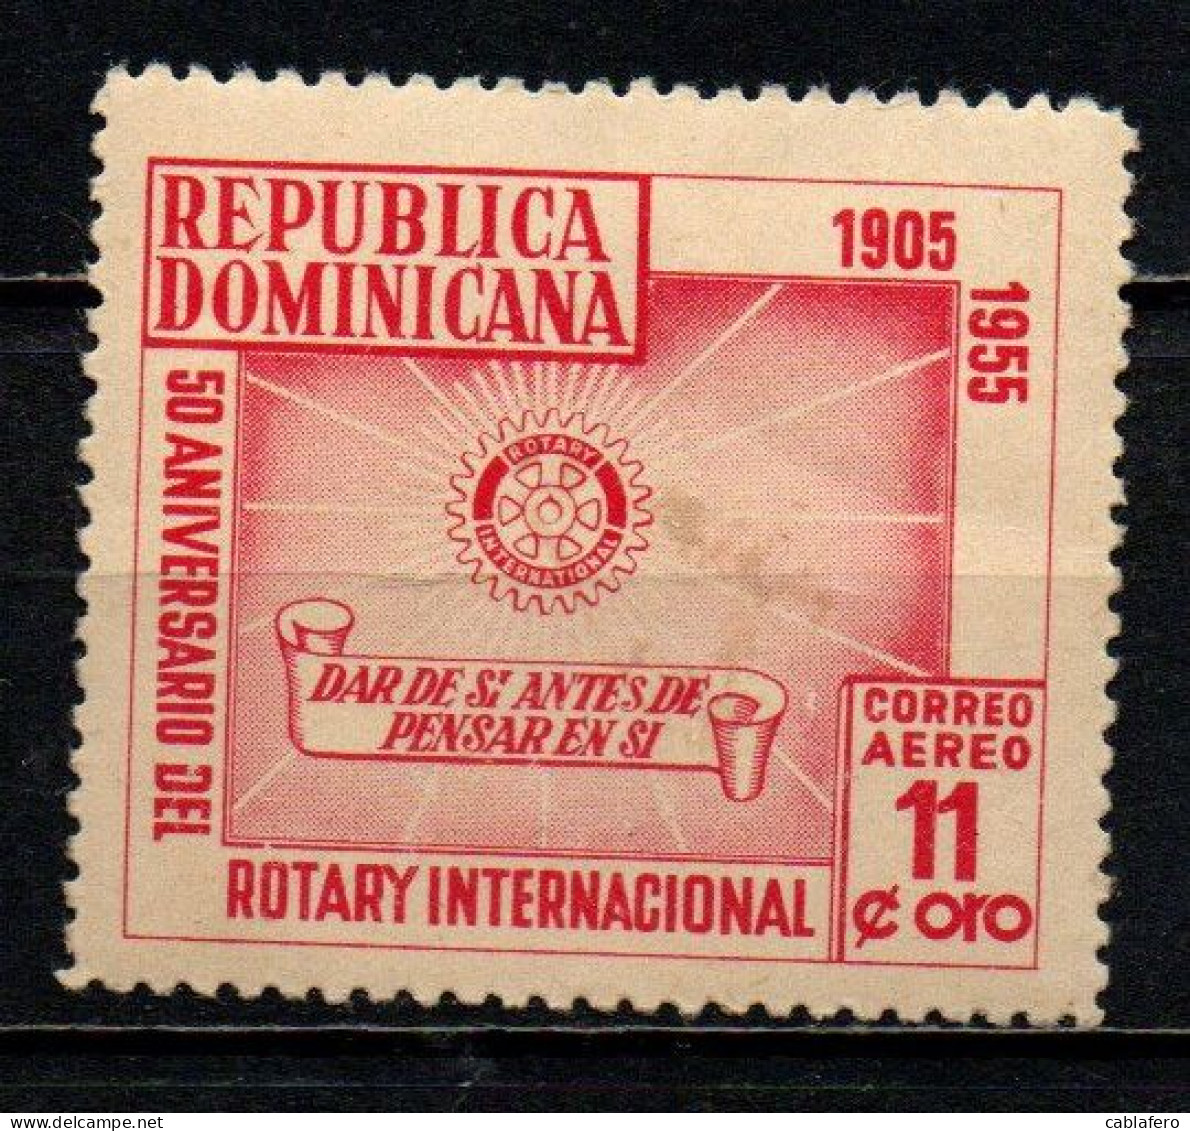 REPUBBLICA DOMENICANA - 1955 - ROTARY INTERNATIONAL - MH - República Dominicana